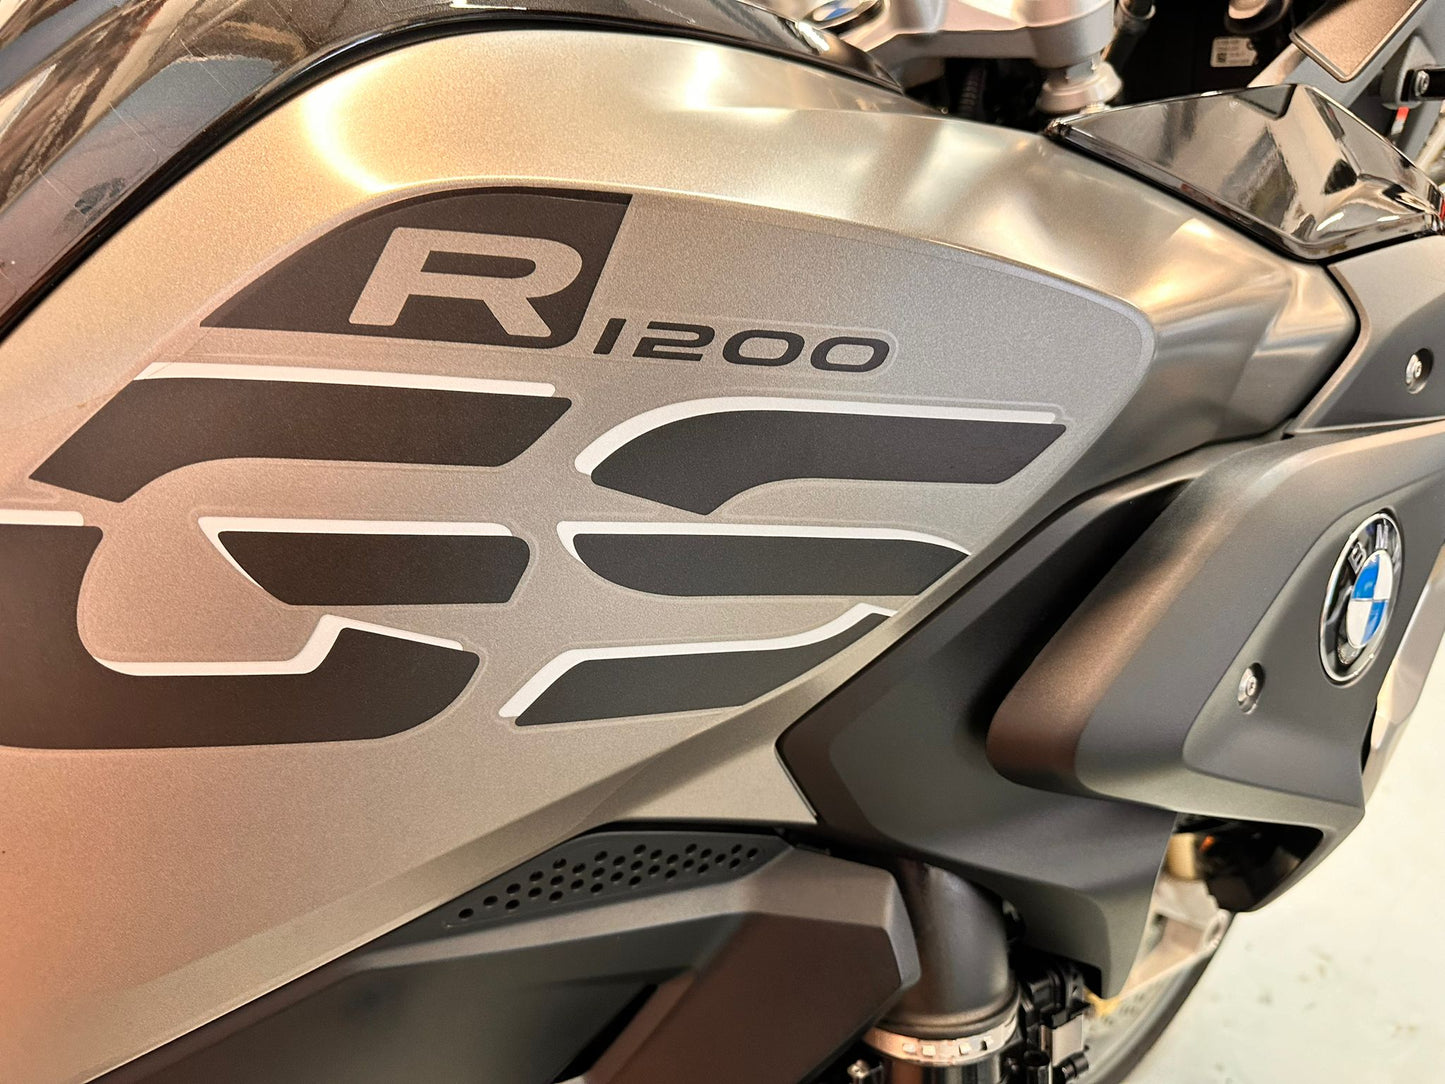 R1200GS TE exclusive (1170cc) 2018